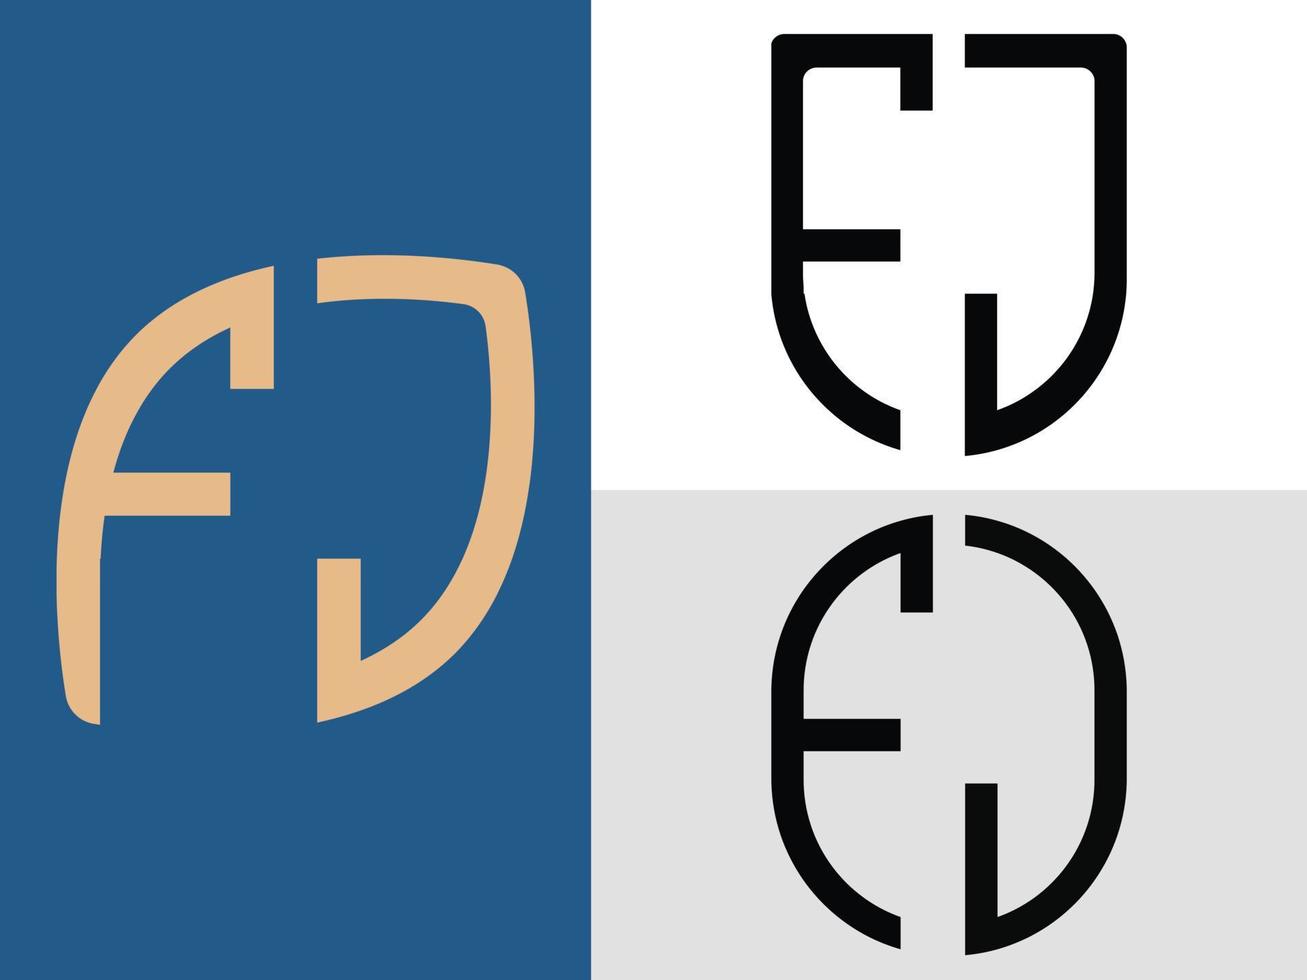 Creative Initial Letters FJ Logo Designs Bundle vector